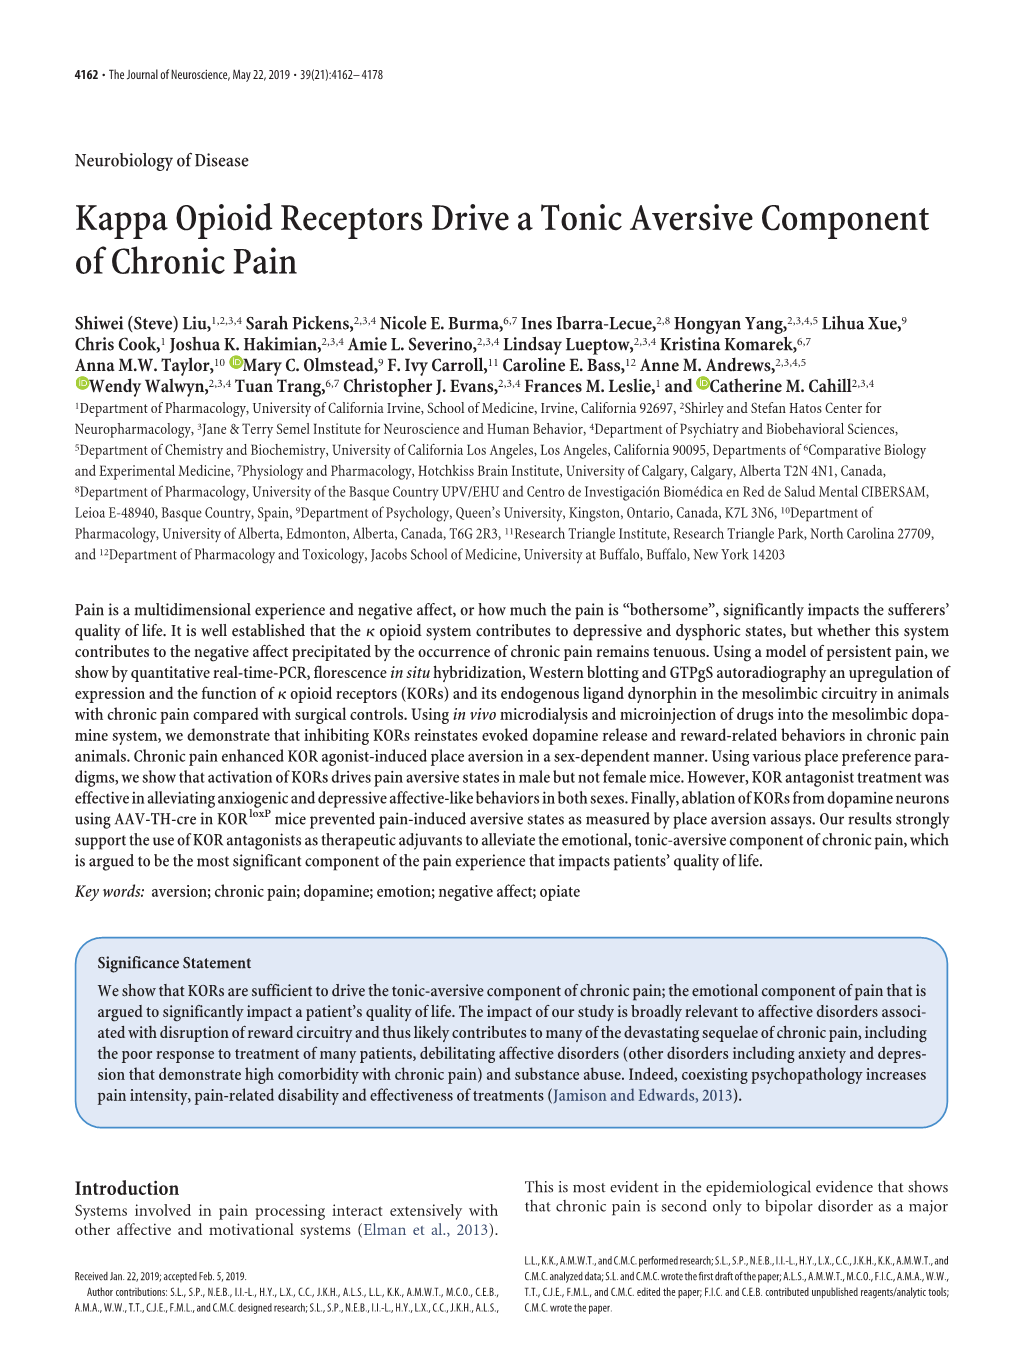 Kappa Opioid Receptors Drive a Tonic Aversive Component of Chronic Pain